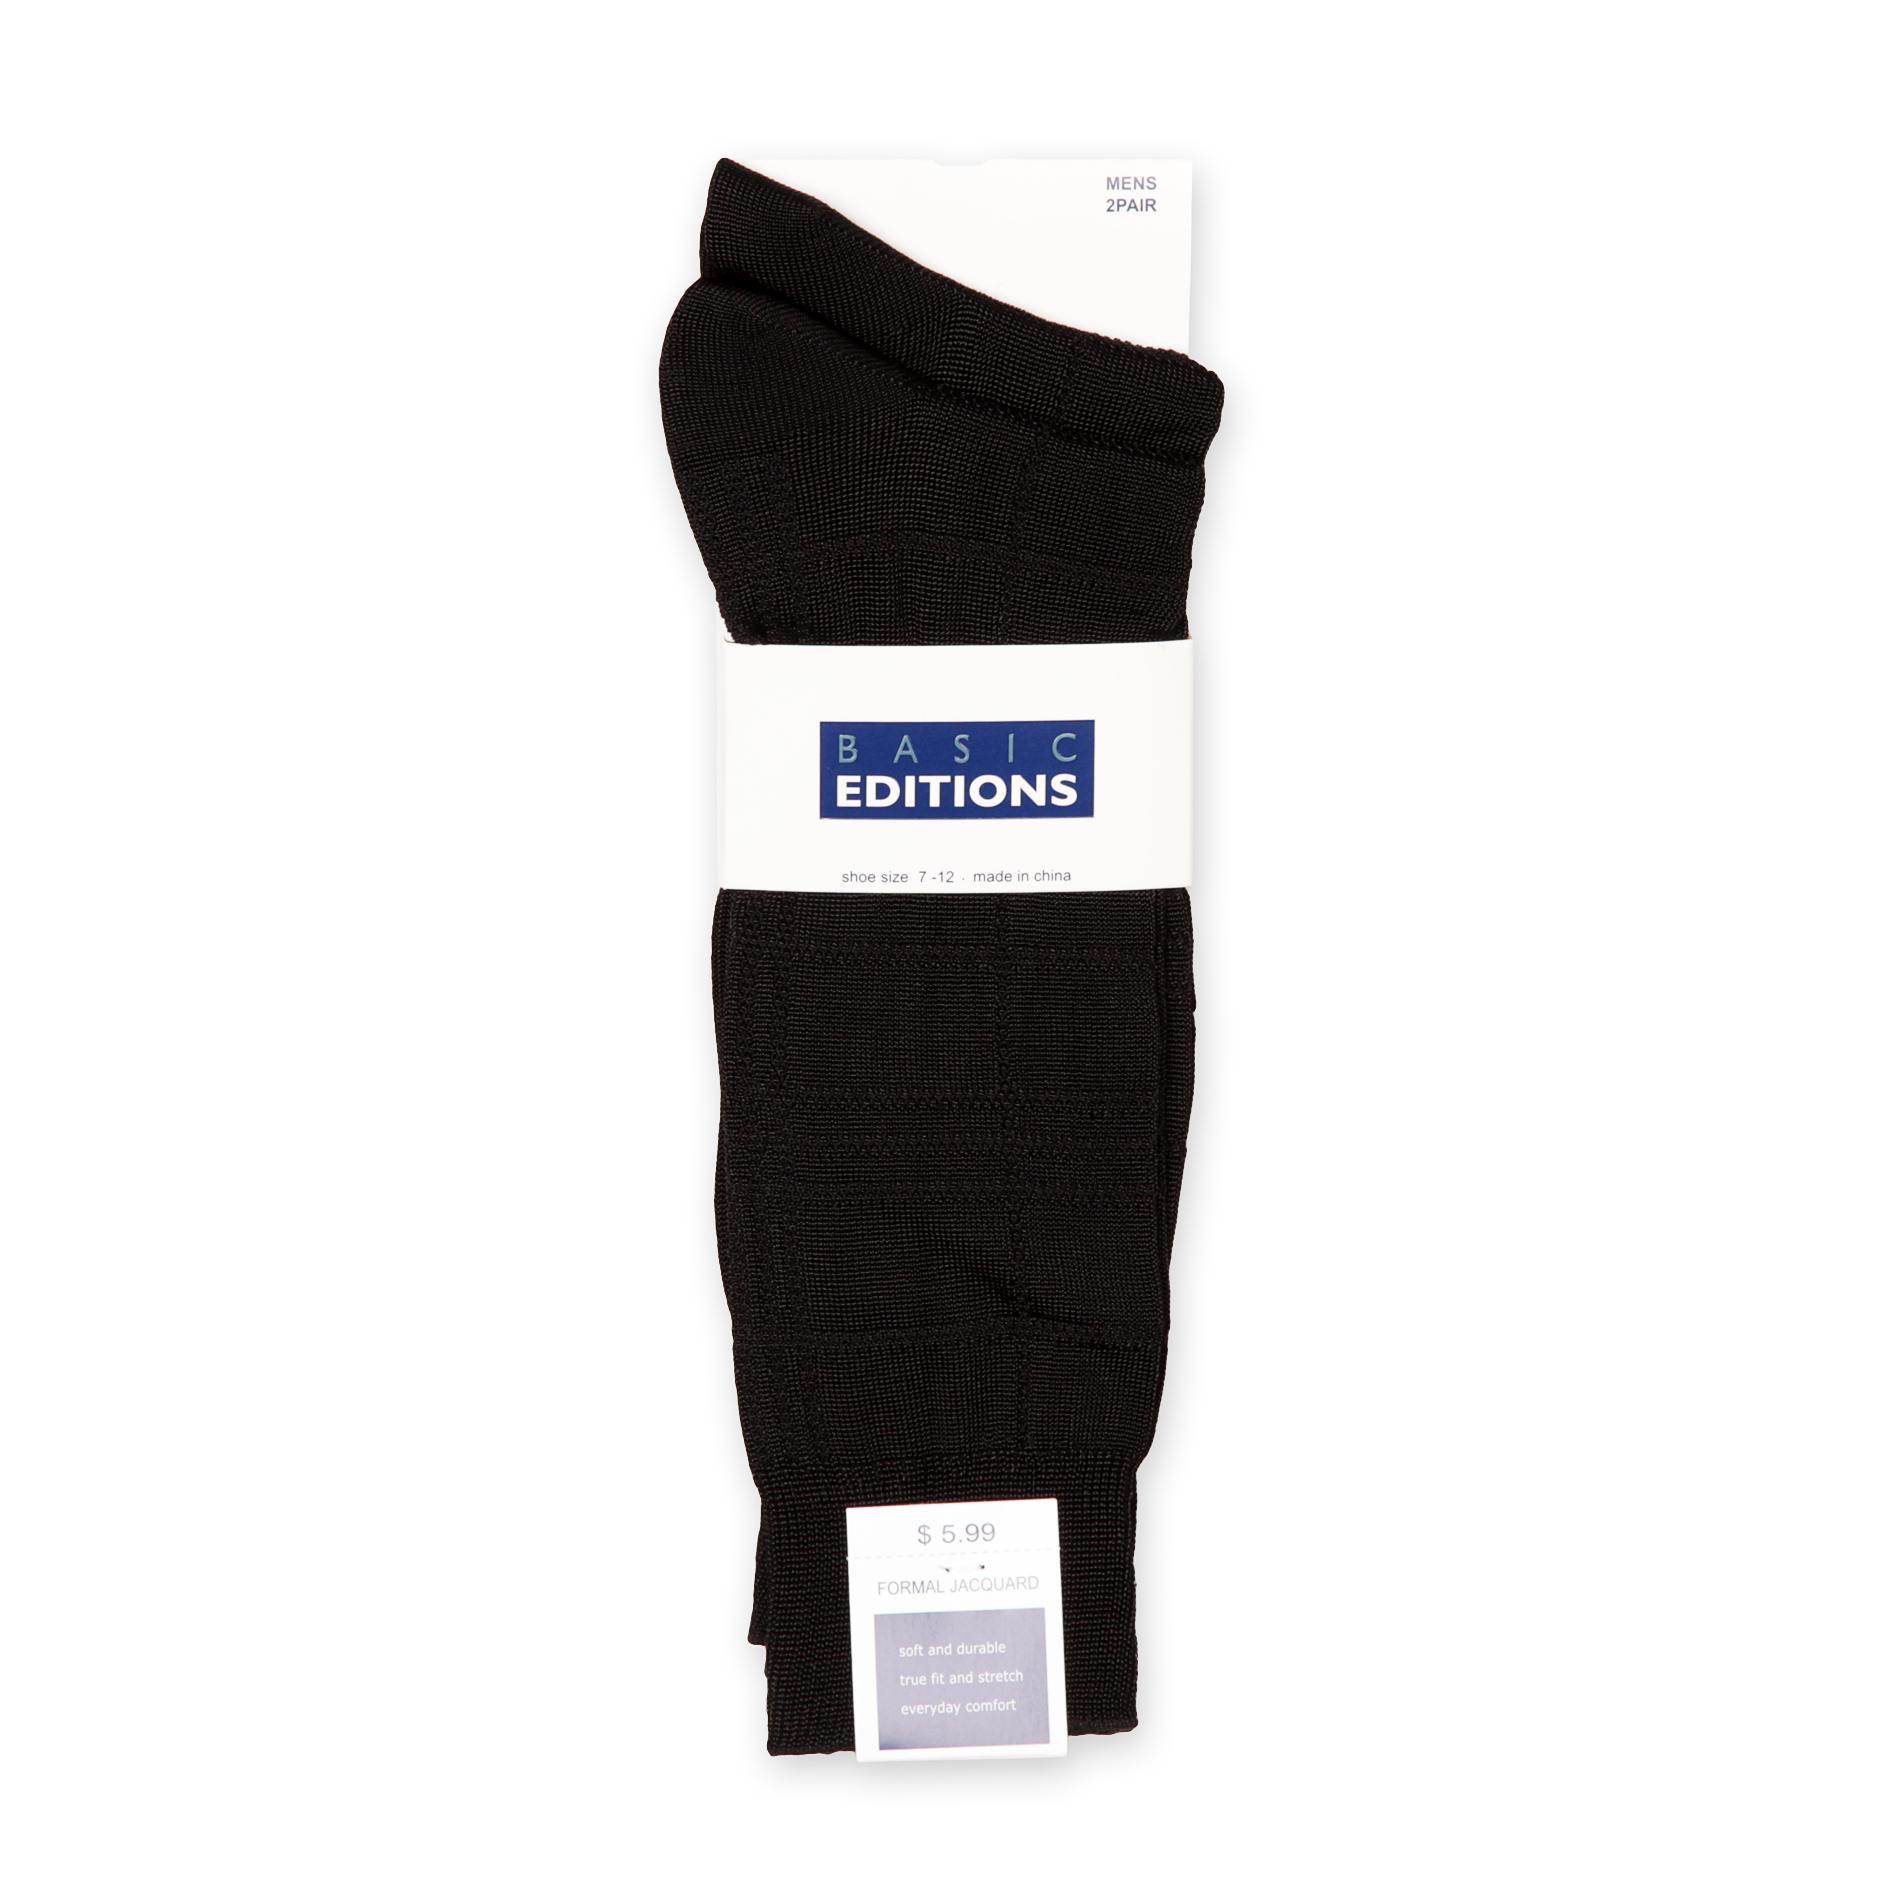 Basic Editions Men's 2-Pairs Dress Socks - Jacquard Pattern